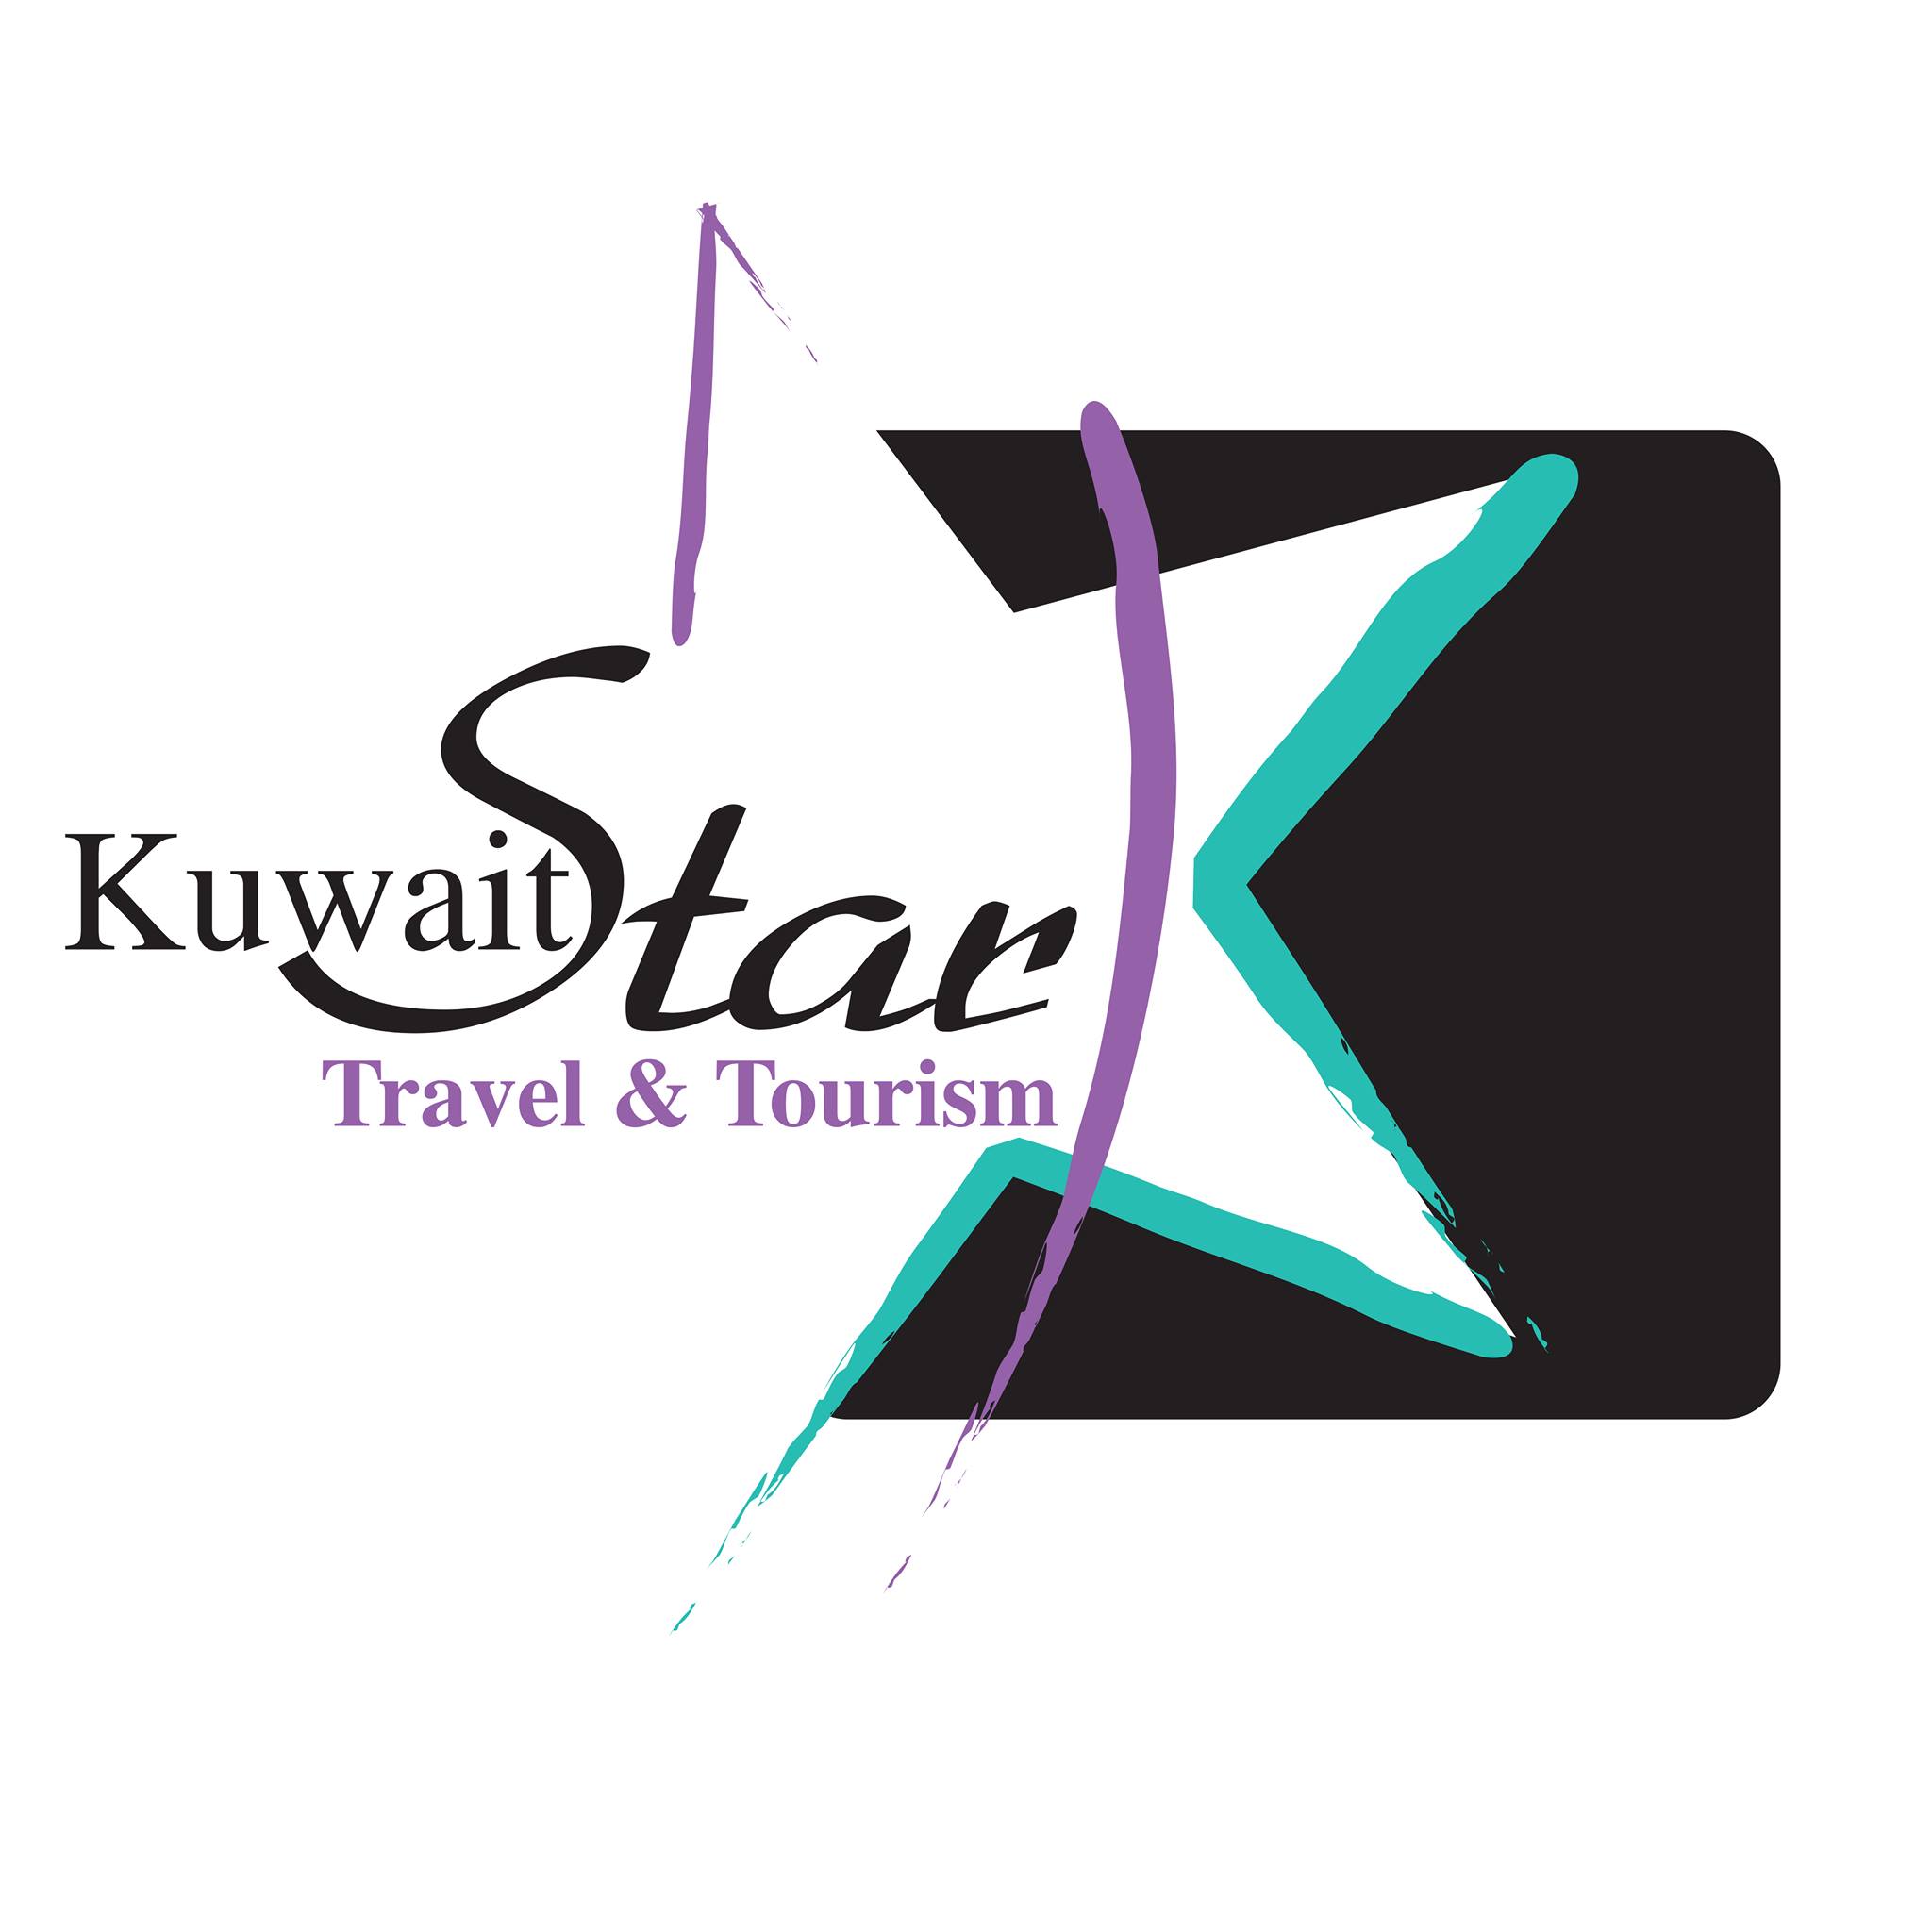 kuwait star